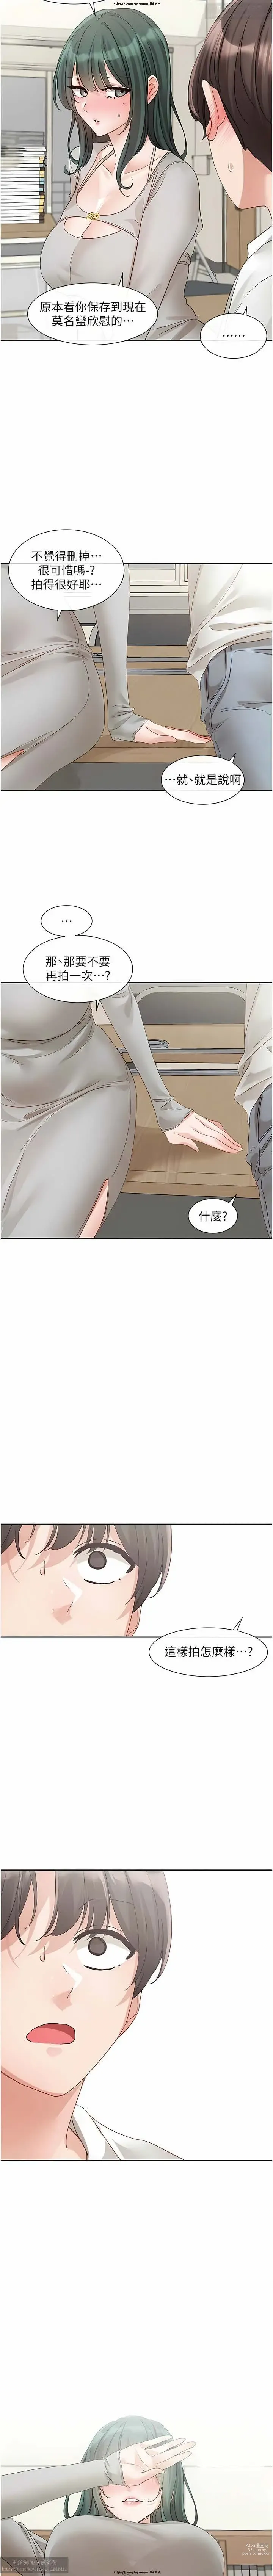 Page 58 of manga 社團學姊 138-141 官方中文 社团学姐